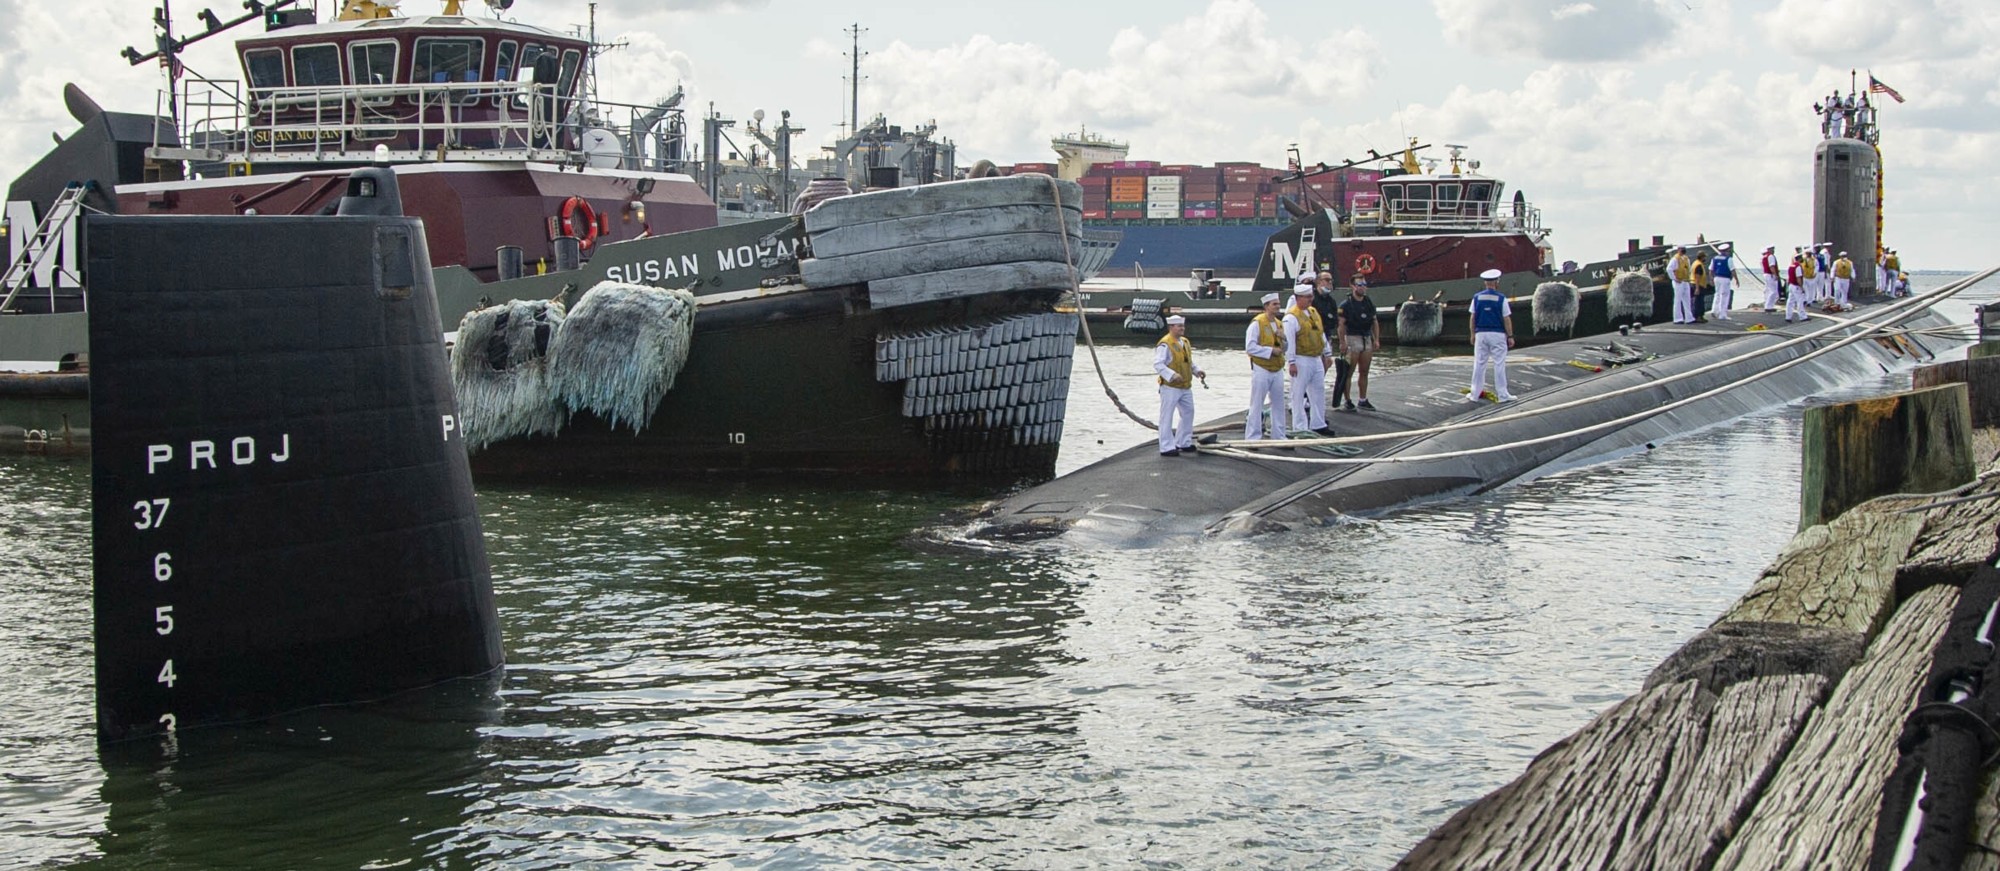 ssn-779 uss new mexico virginia class attack submarine us navy 57 naval station norfolk virginia